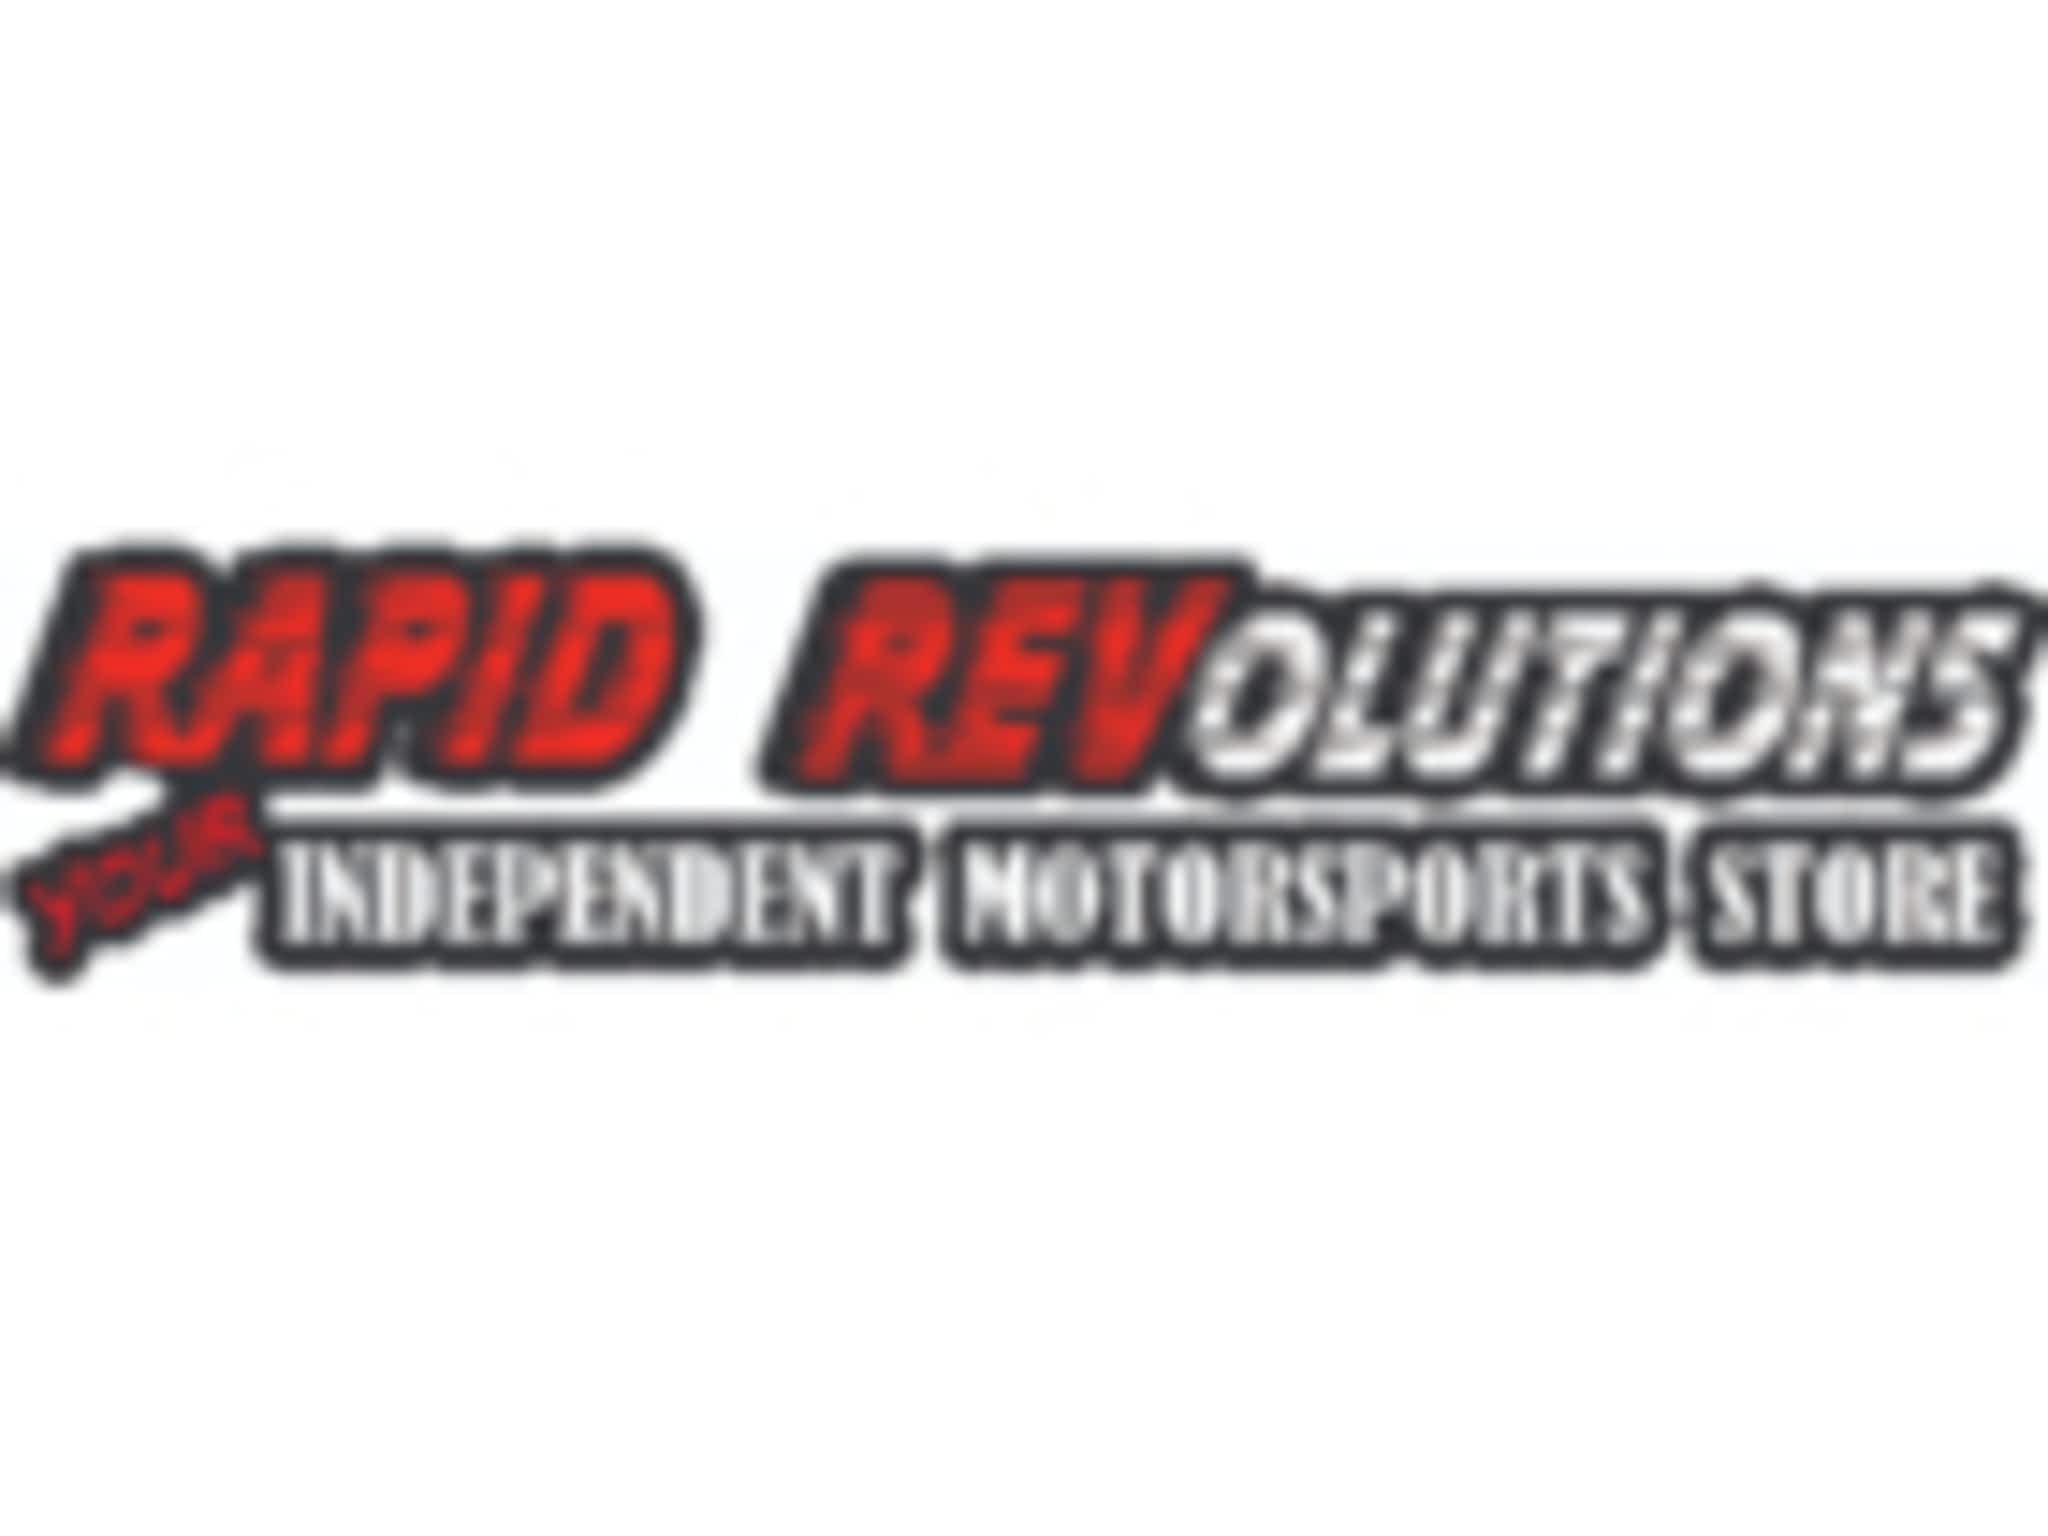 photo Rapid Revolutions Independent Motorsports Store